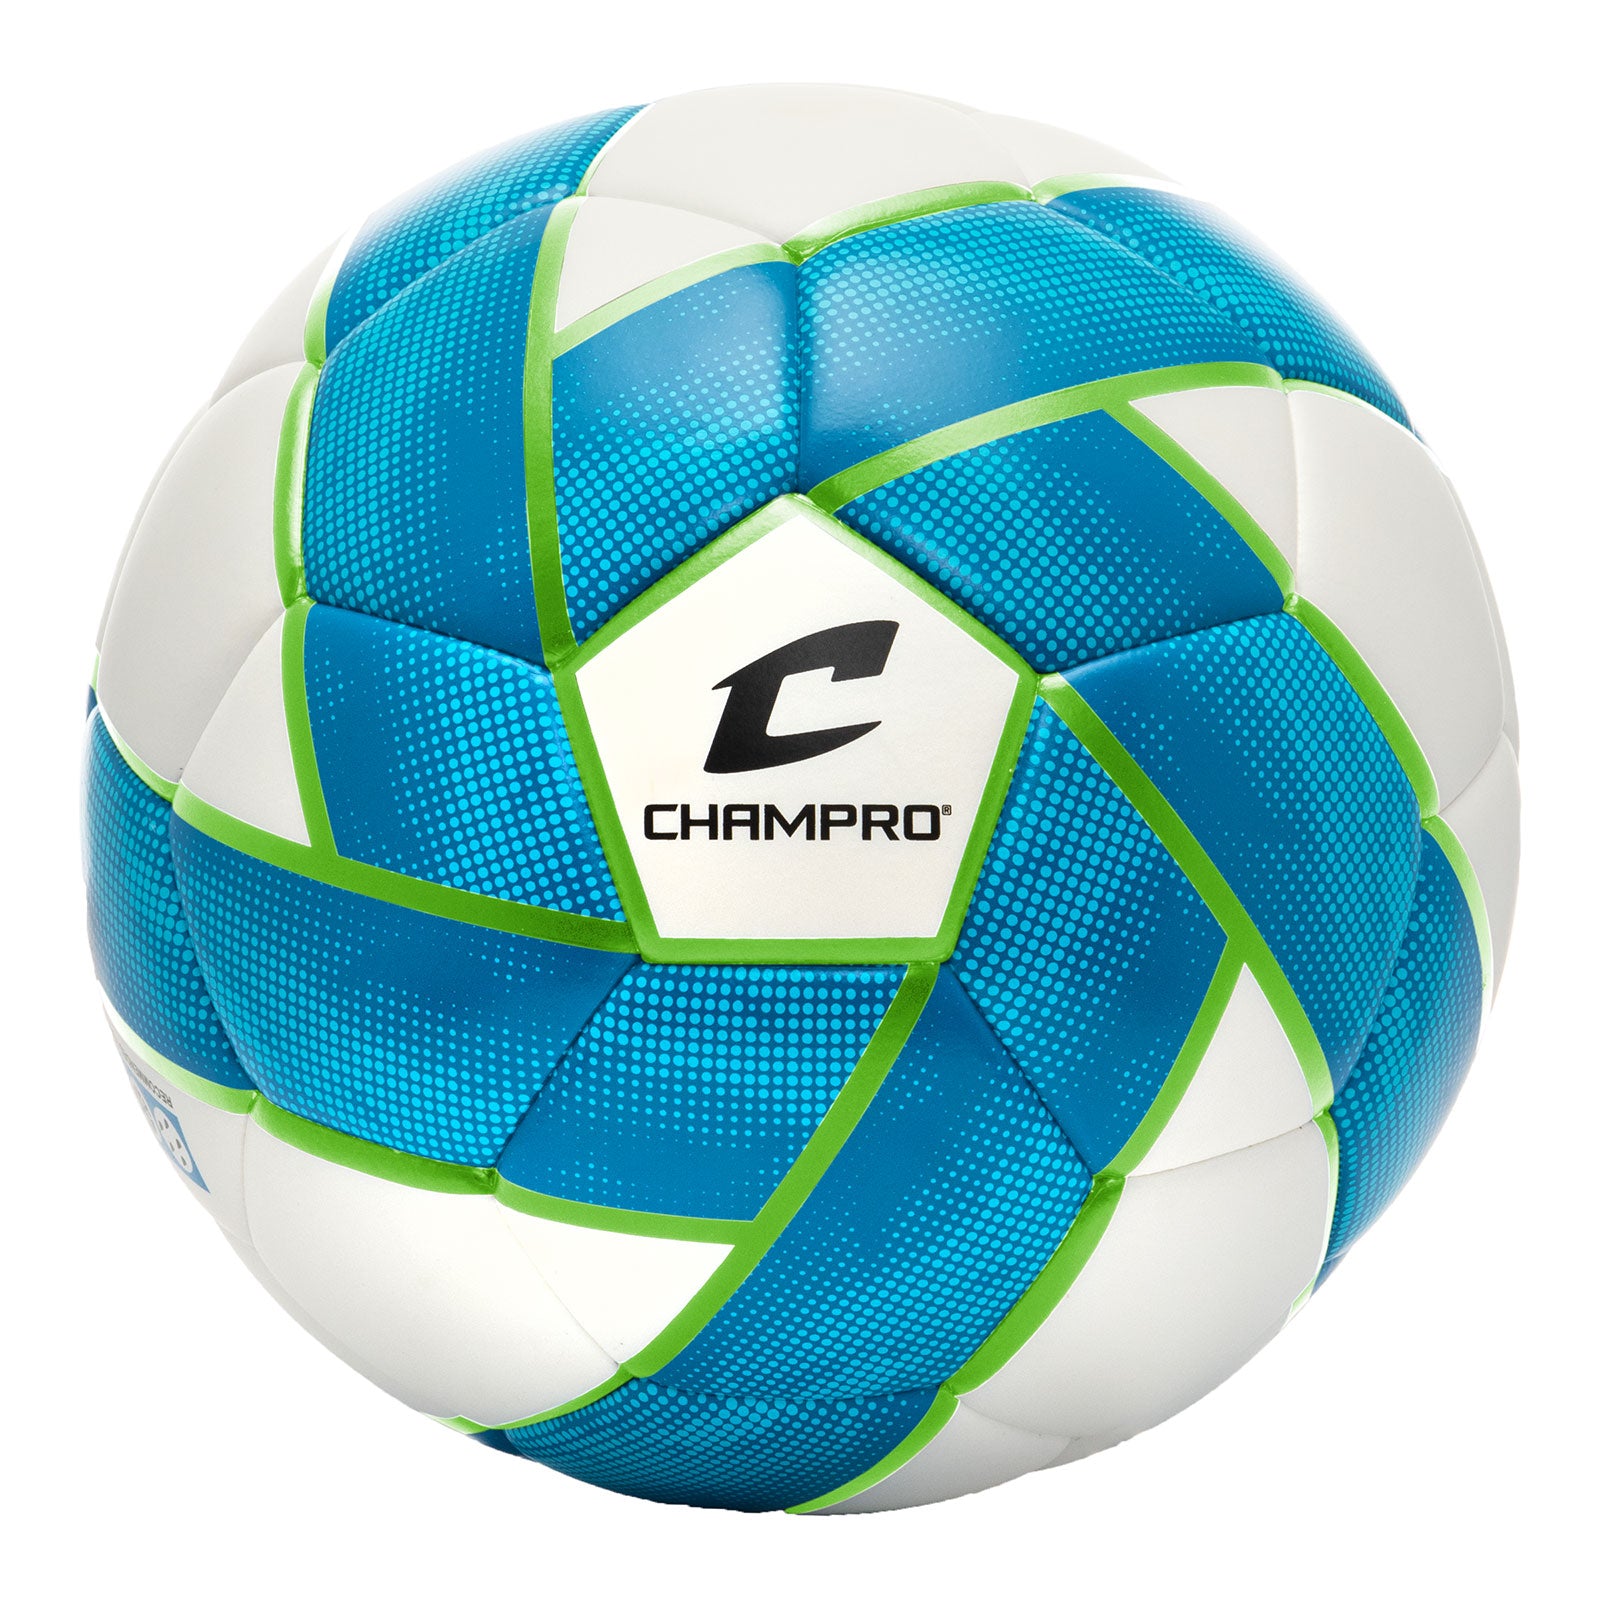 Catalyst Soccer Ball 1600